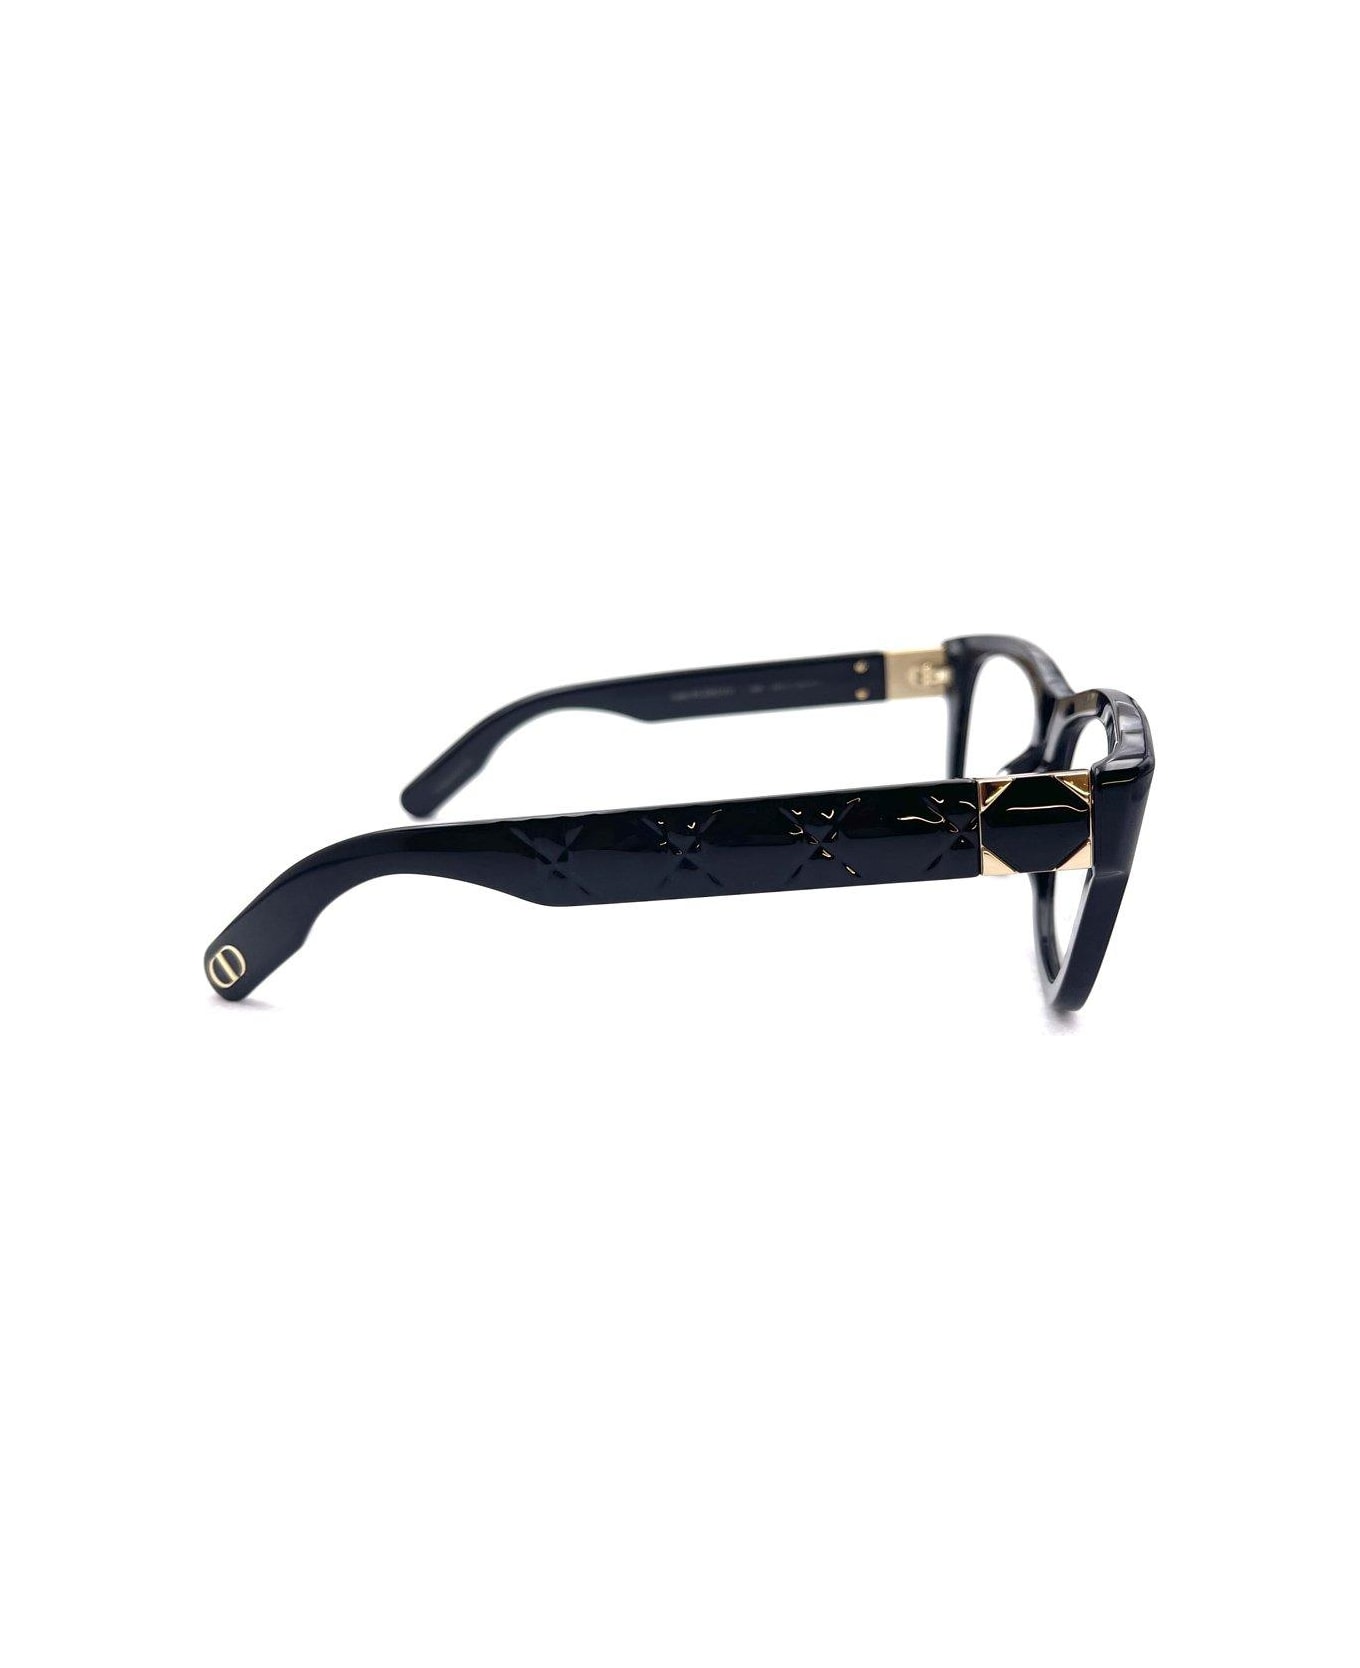 Dior Eyewear Square Frame Glasses - 1000